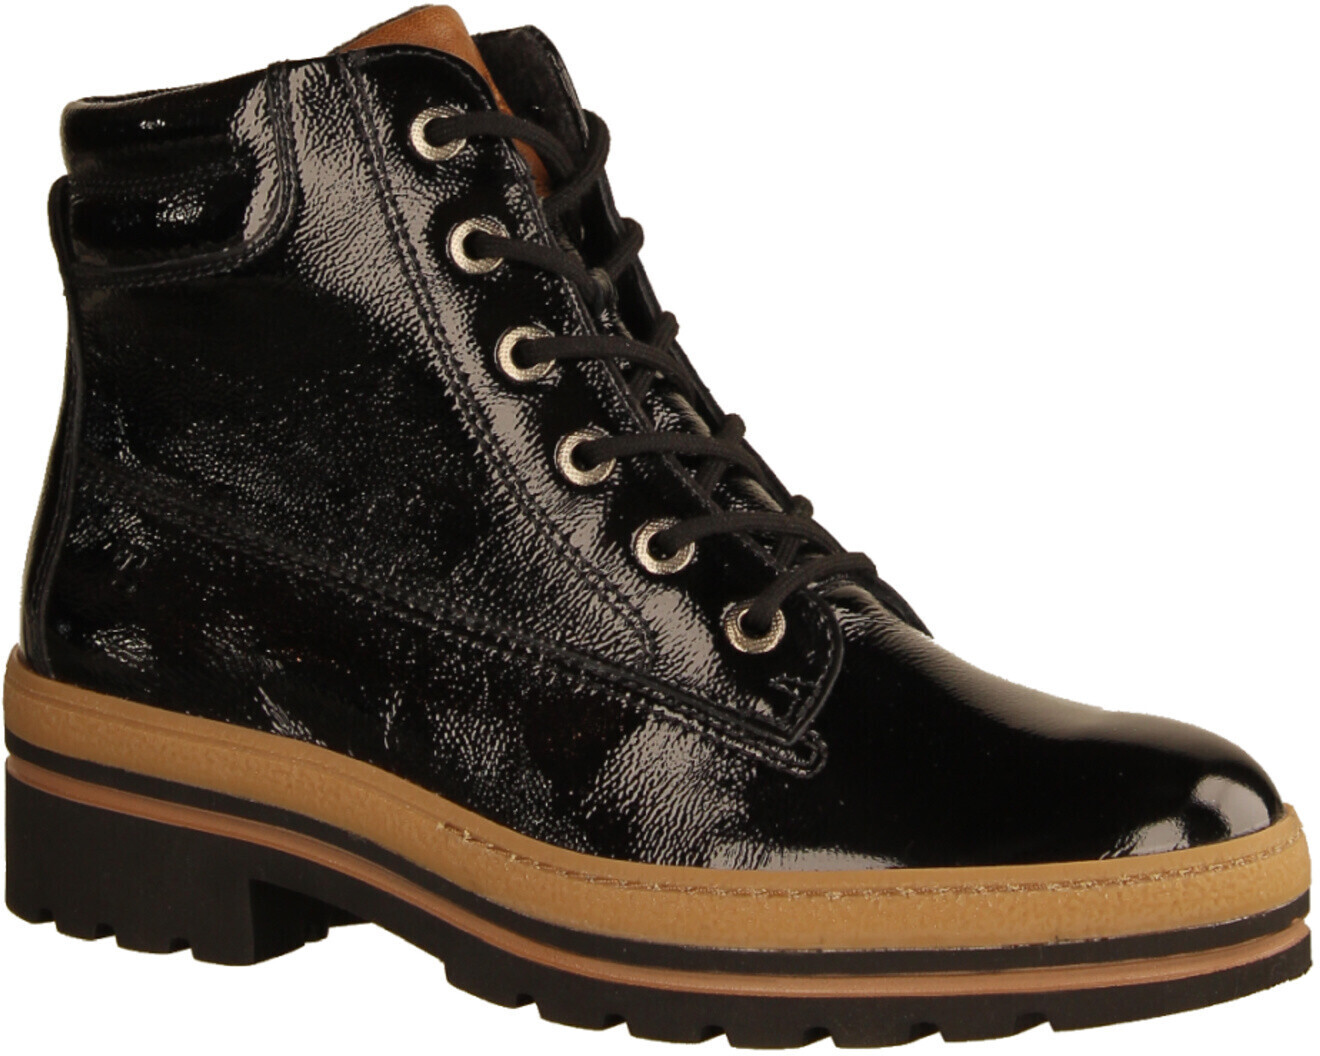 Paul Green Boots (9783) black ab 99,00 € | Preisvergleich bei idealo.de